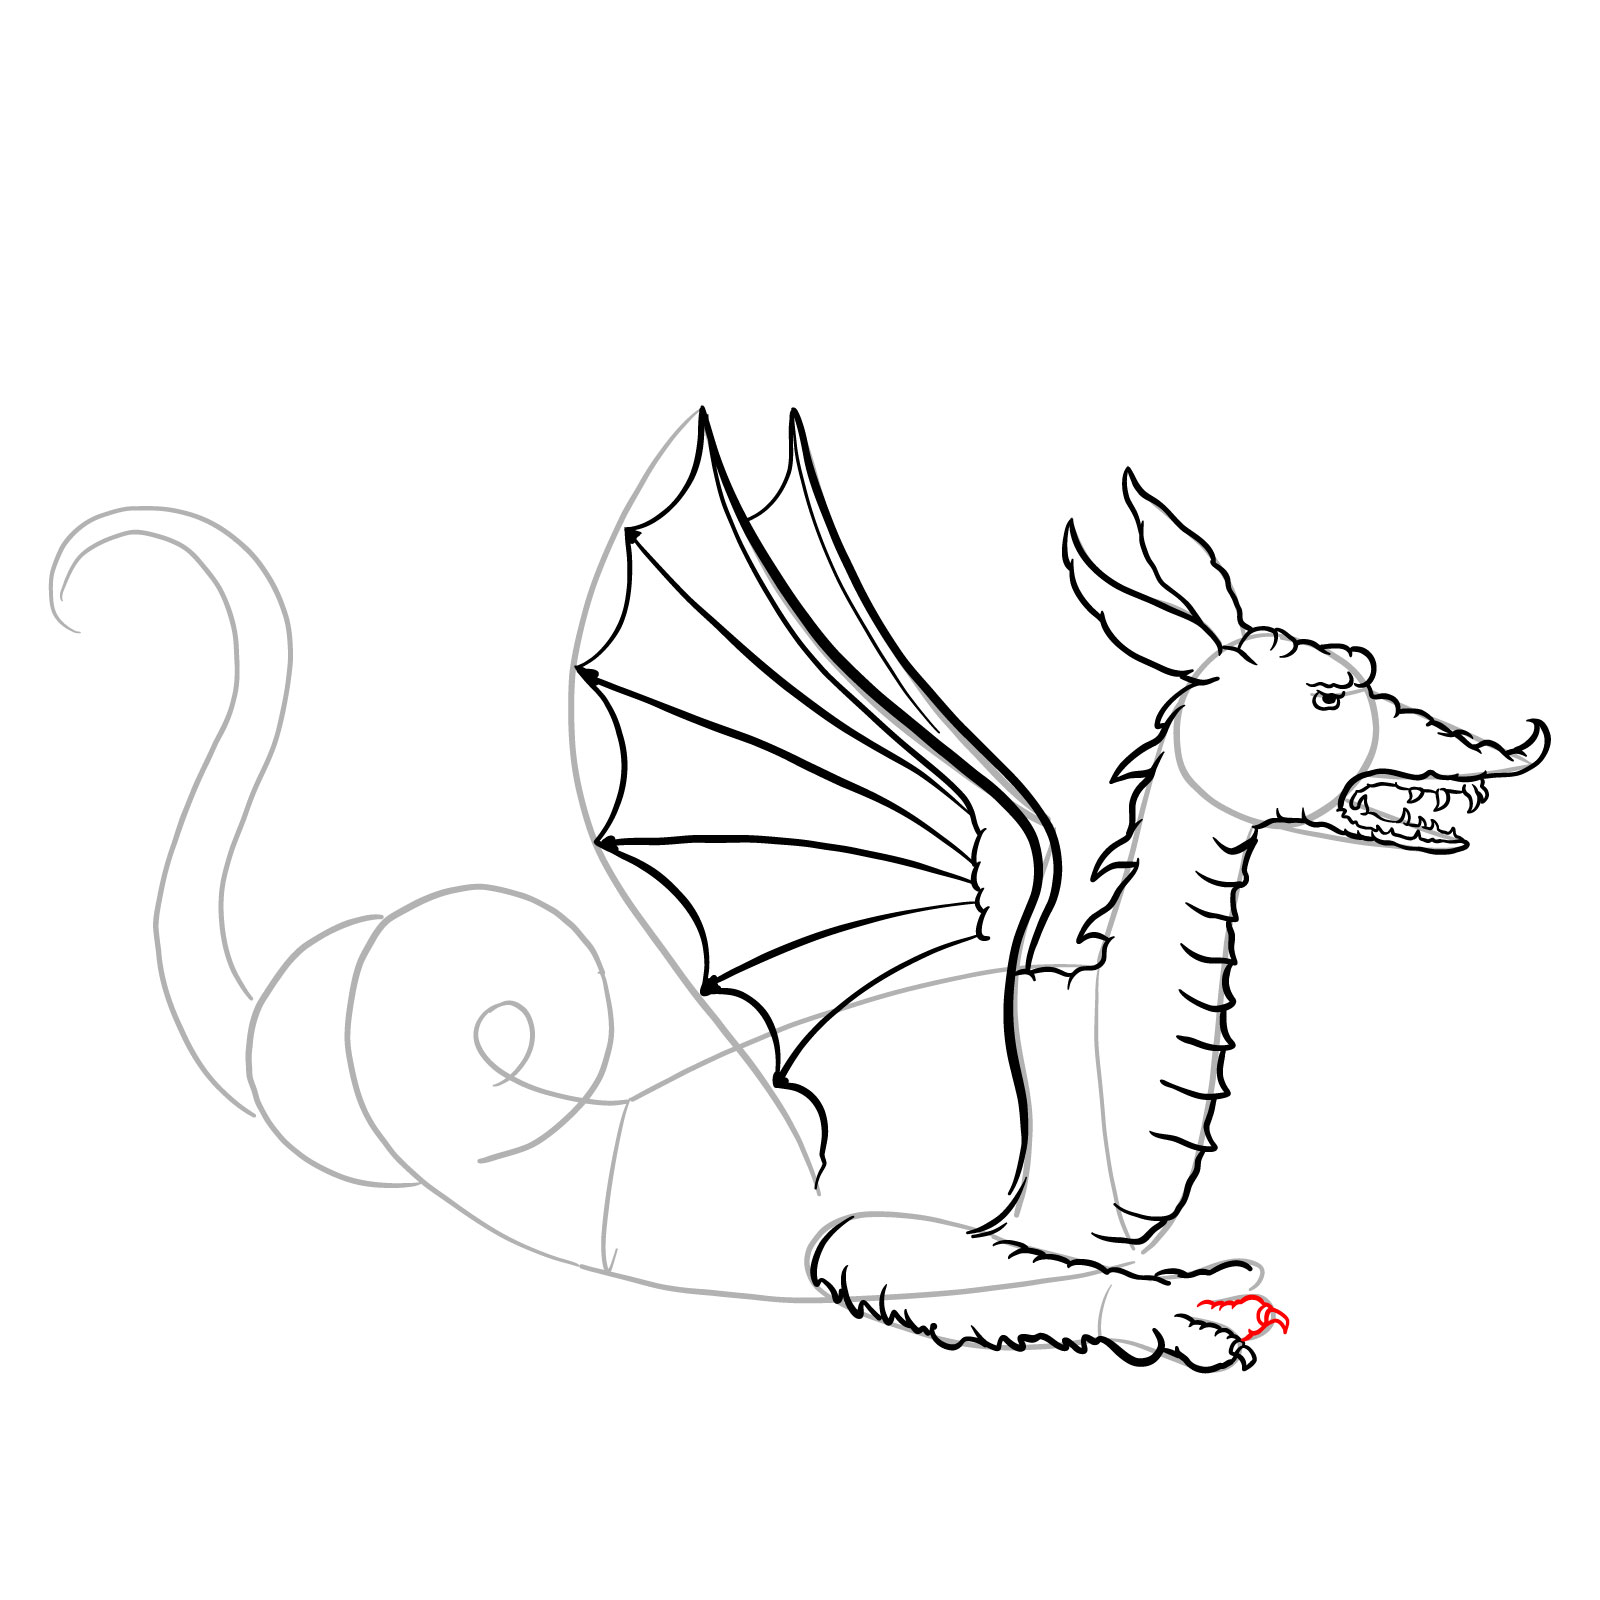 How to draw a Knucker dragon - step 21